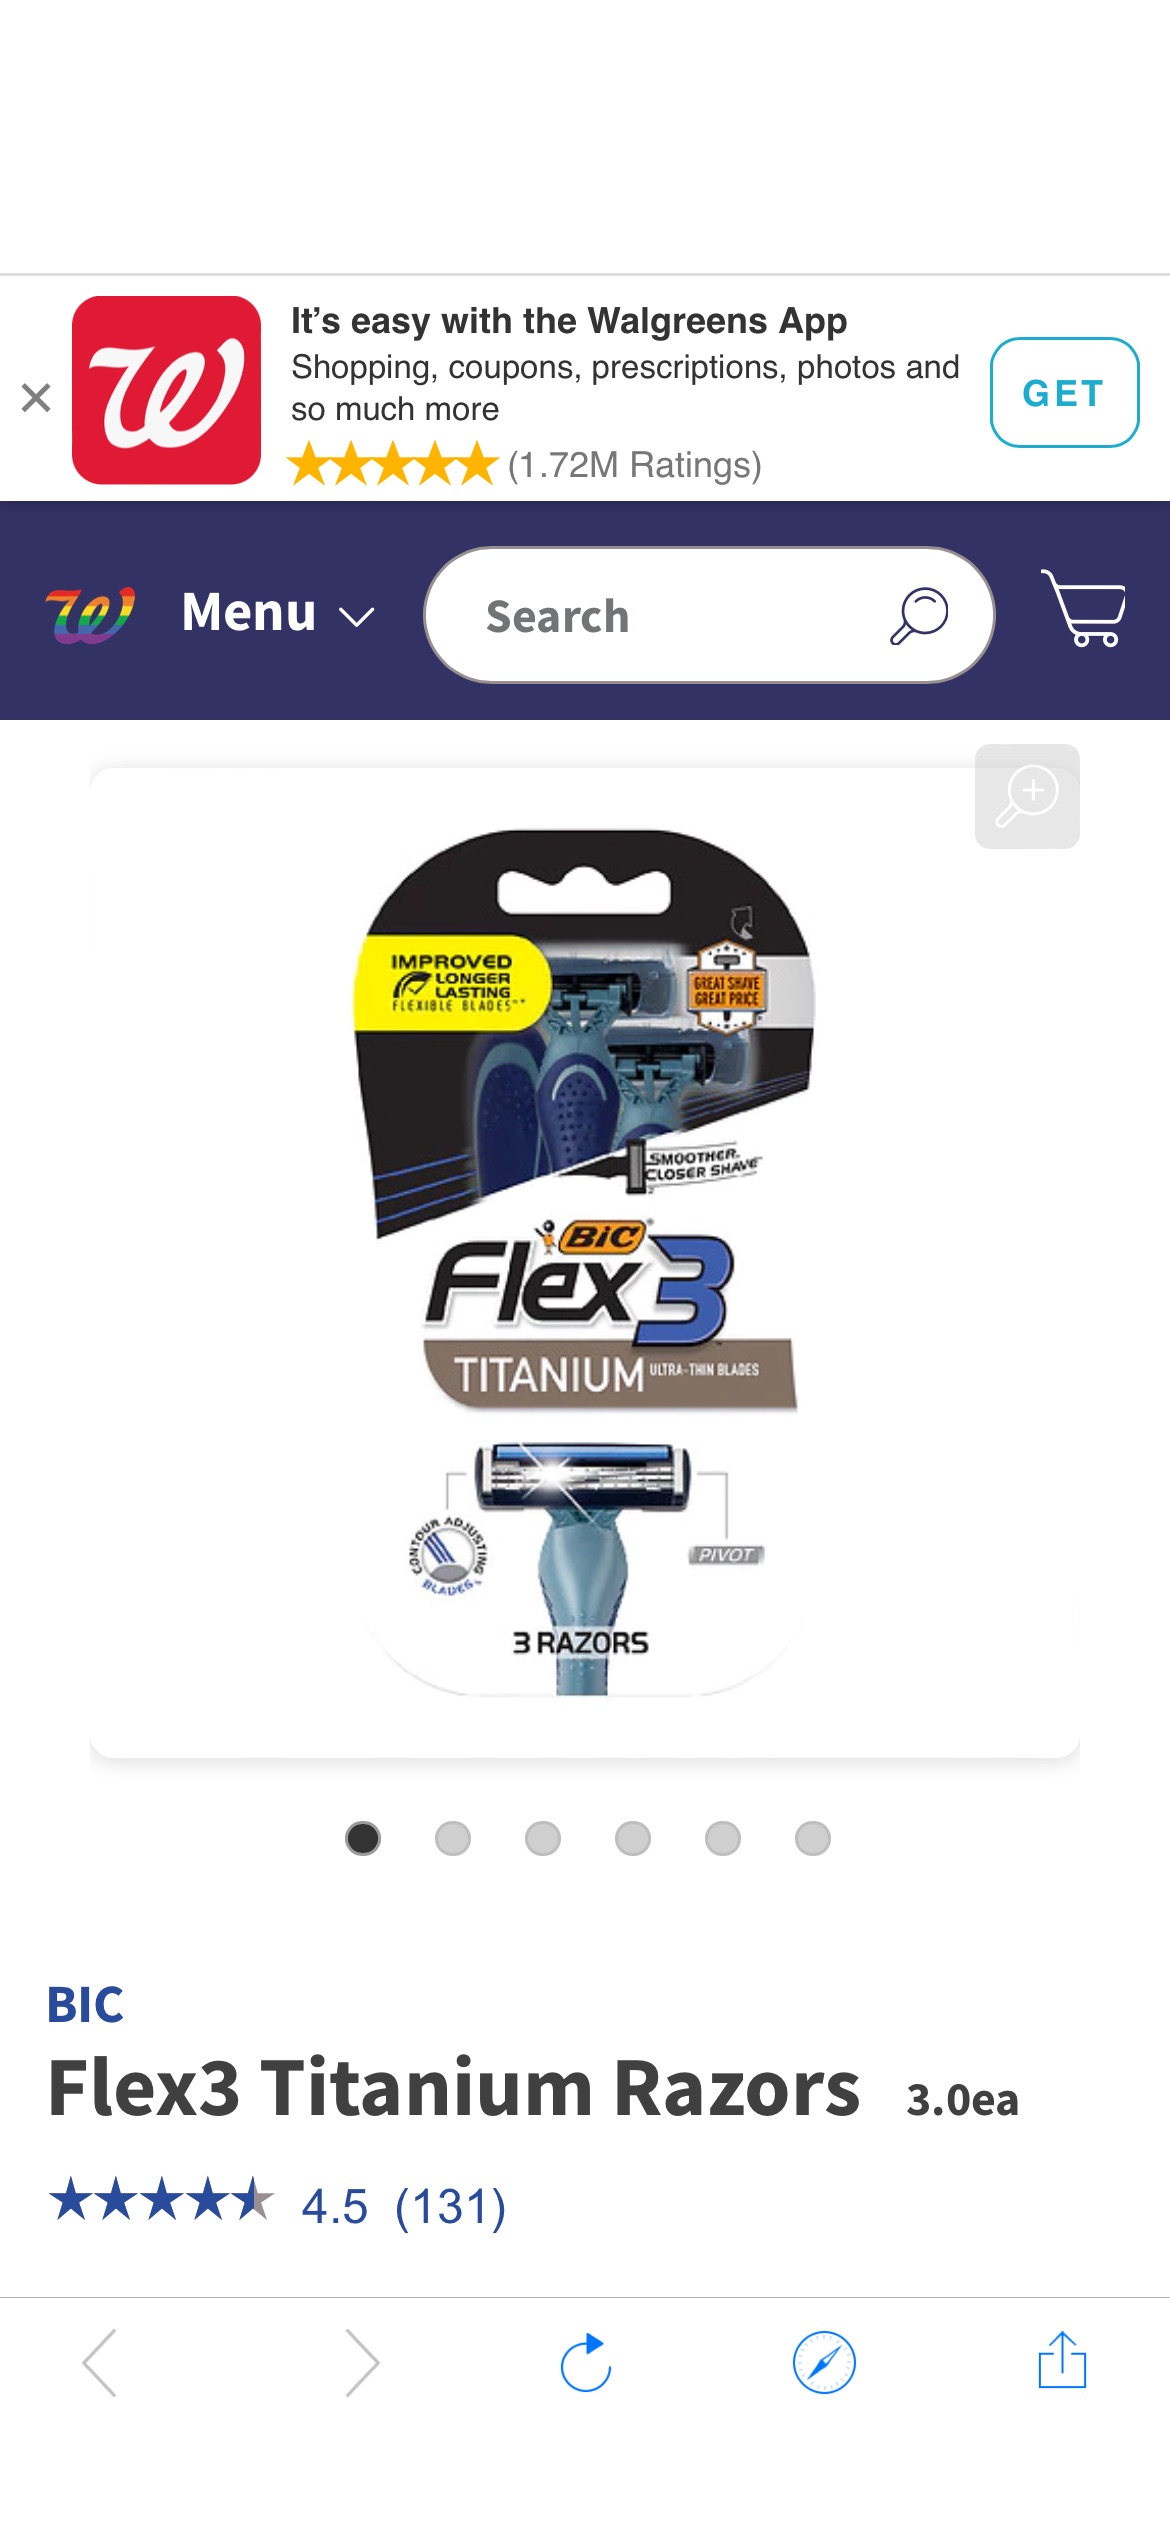 BIC Flex3 Titanium Razors | Walgreens 免费剃刀，需用帐号$4优惠券